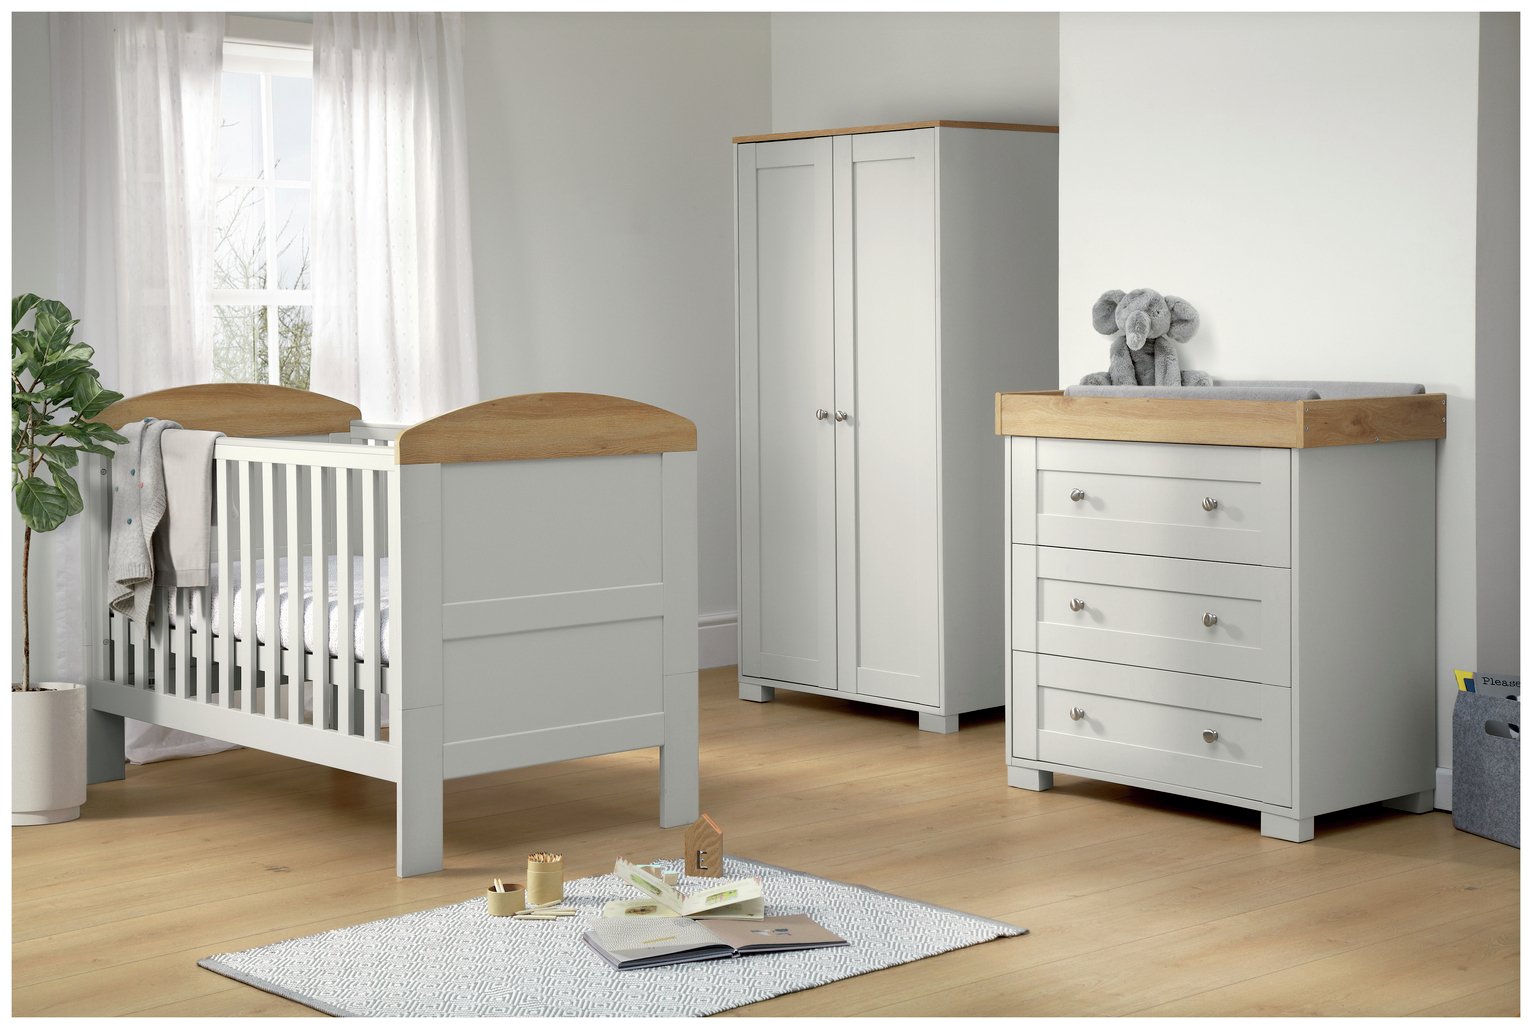 argos baby furniture set